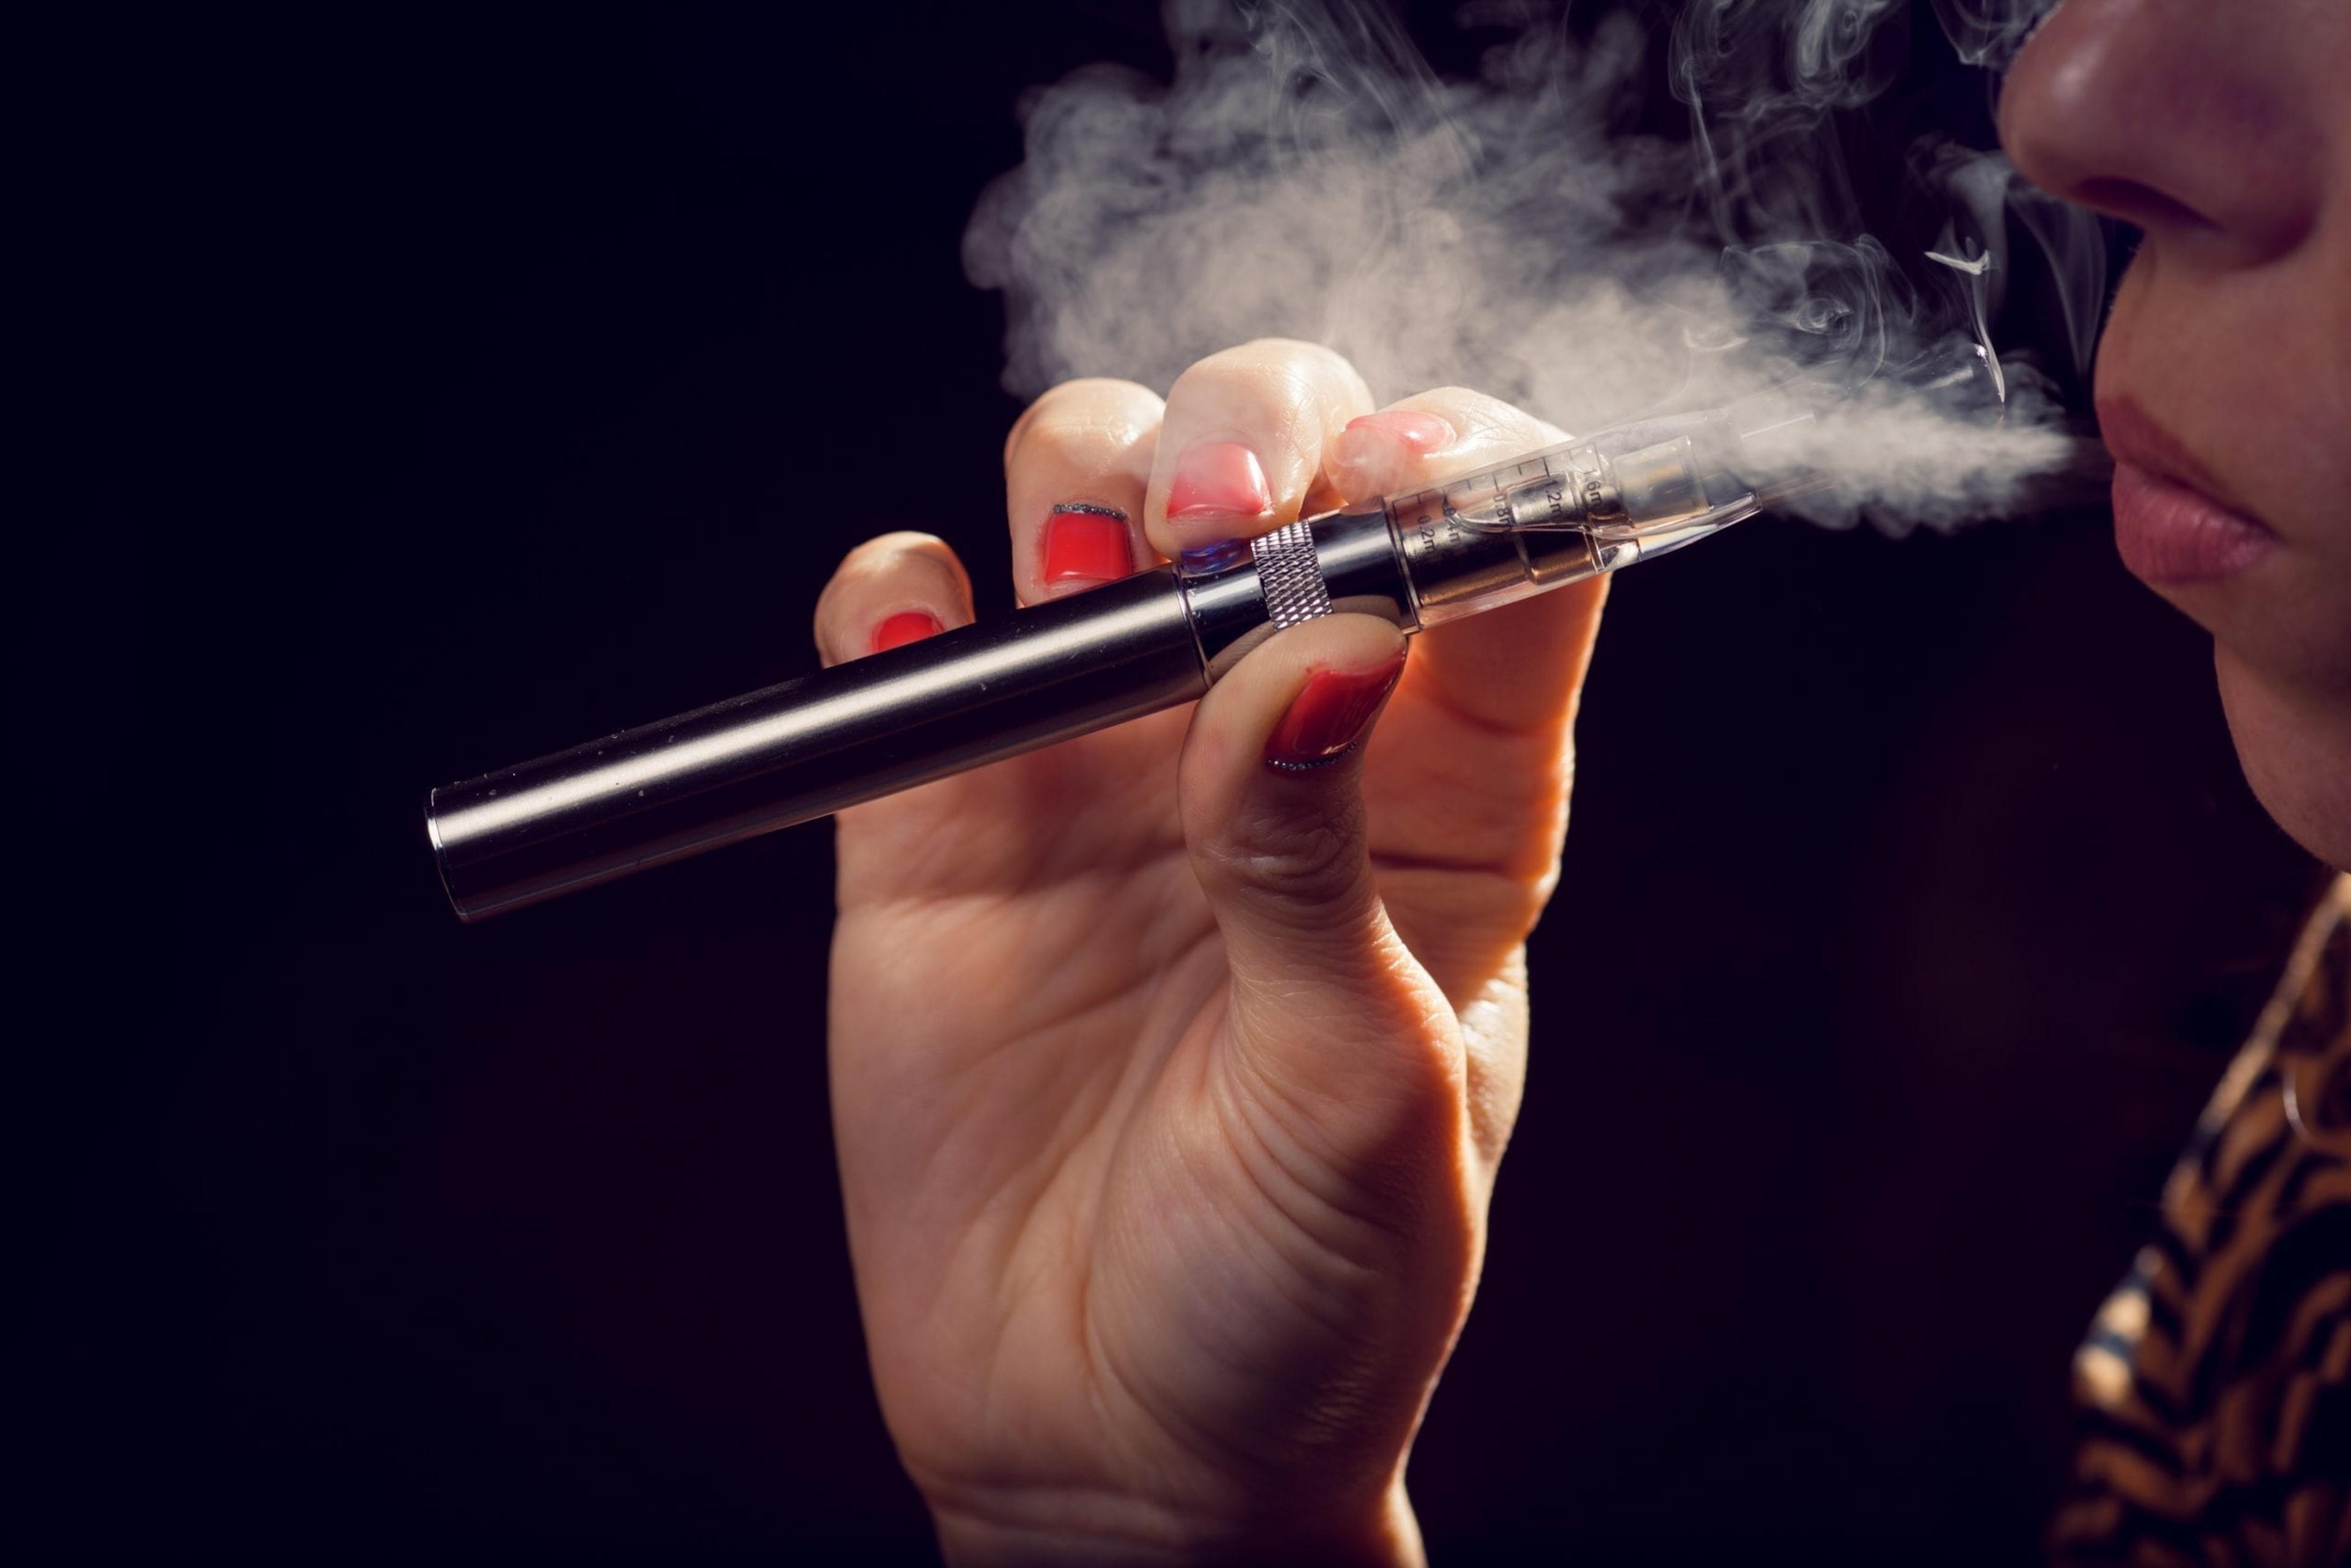 Teen exhaling from an e-cigarette